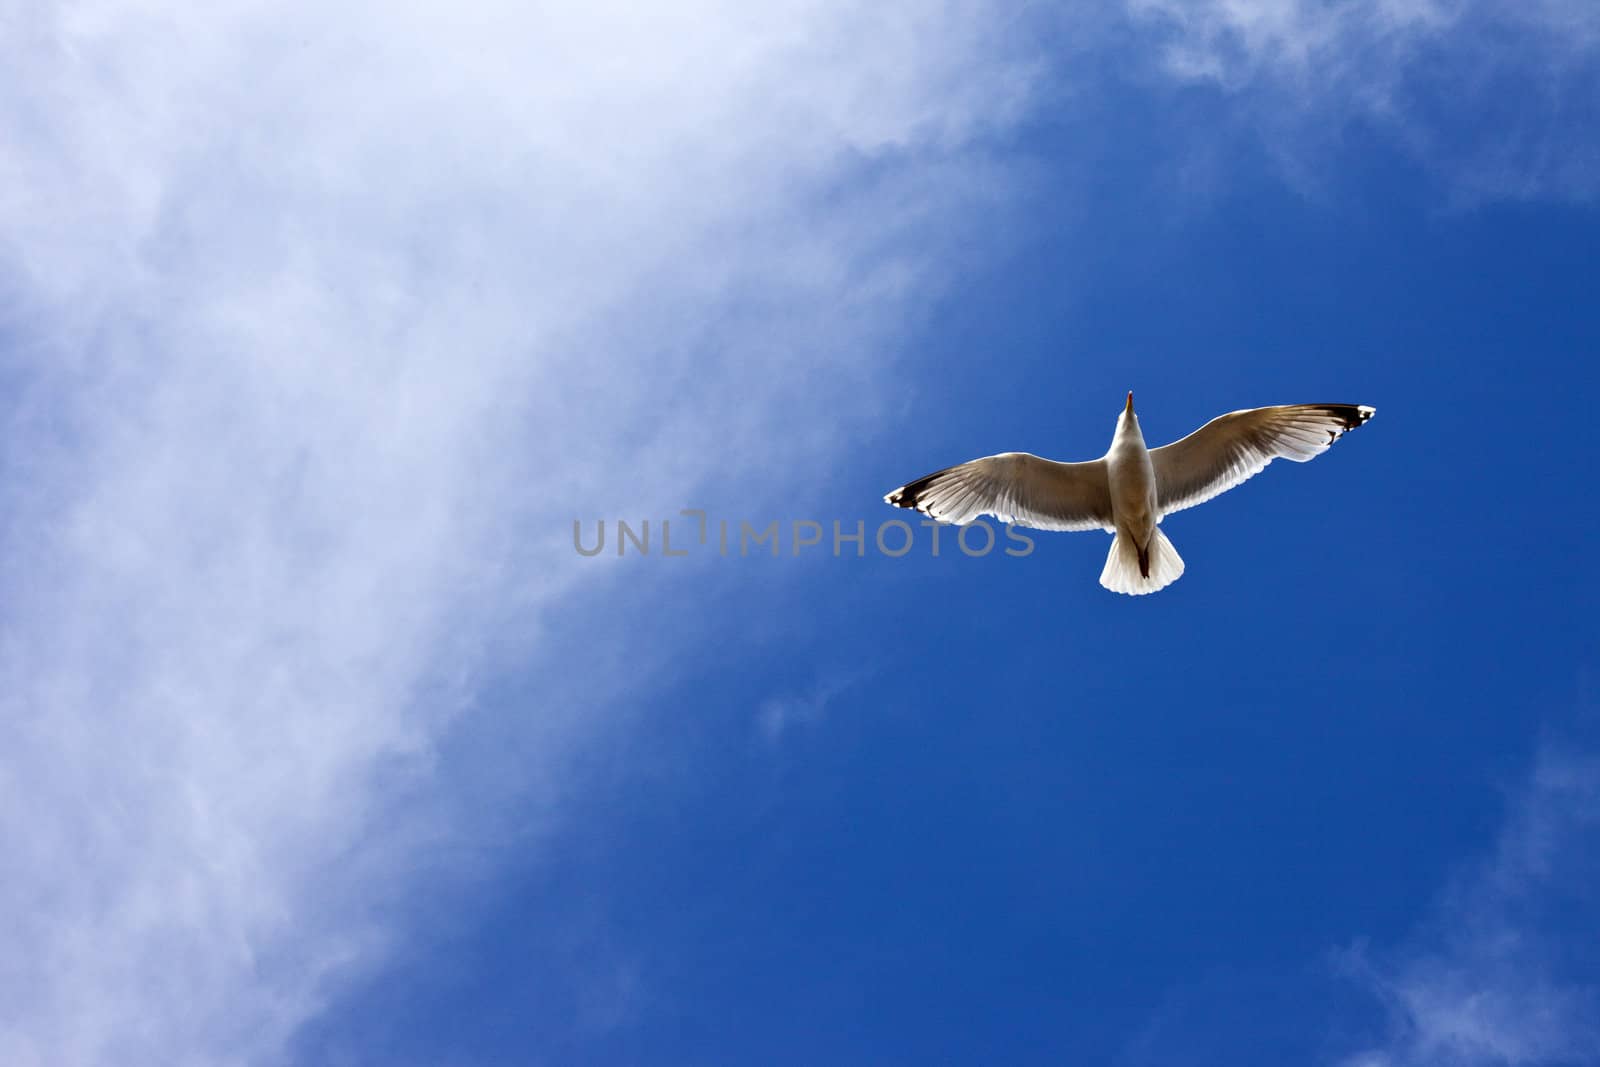 Seagul in Flight by chrisdorney